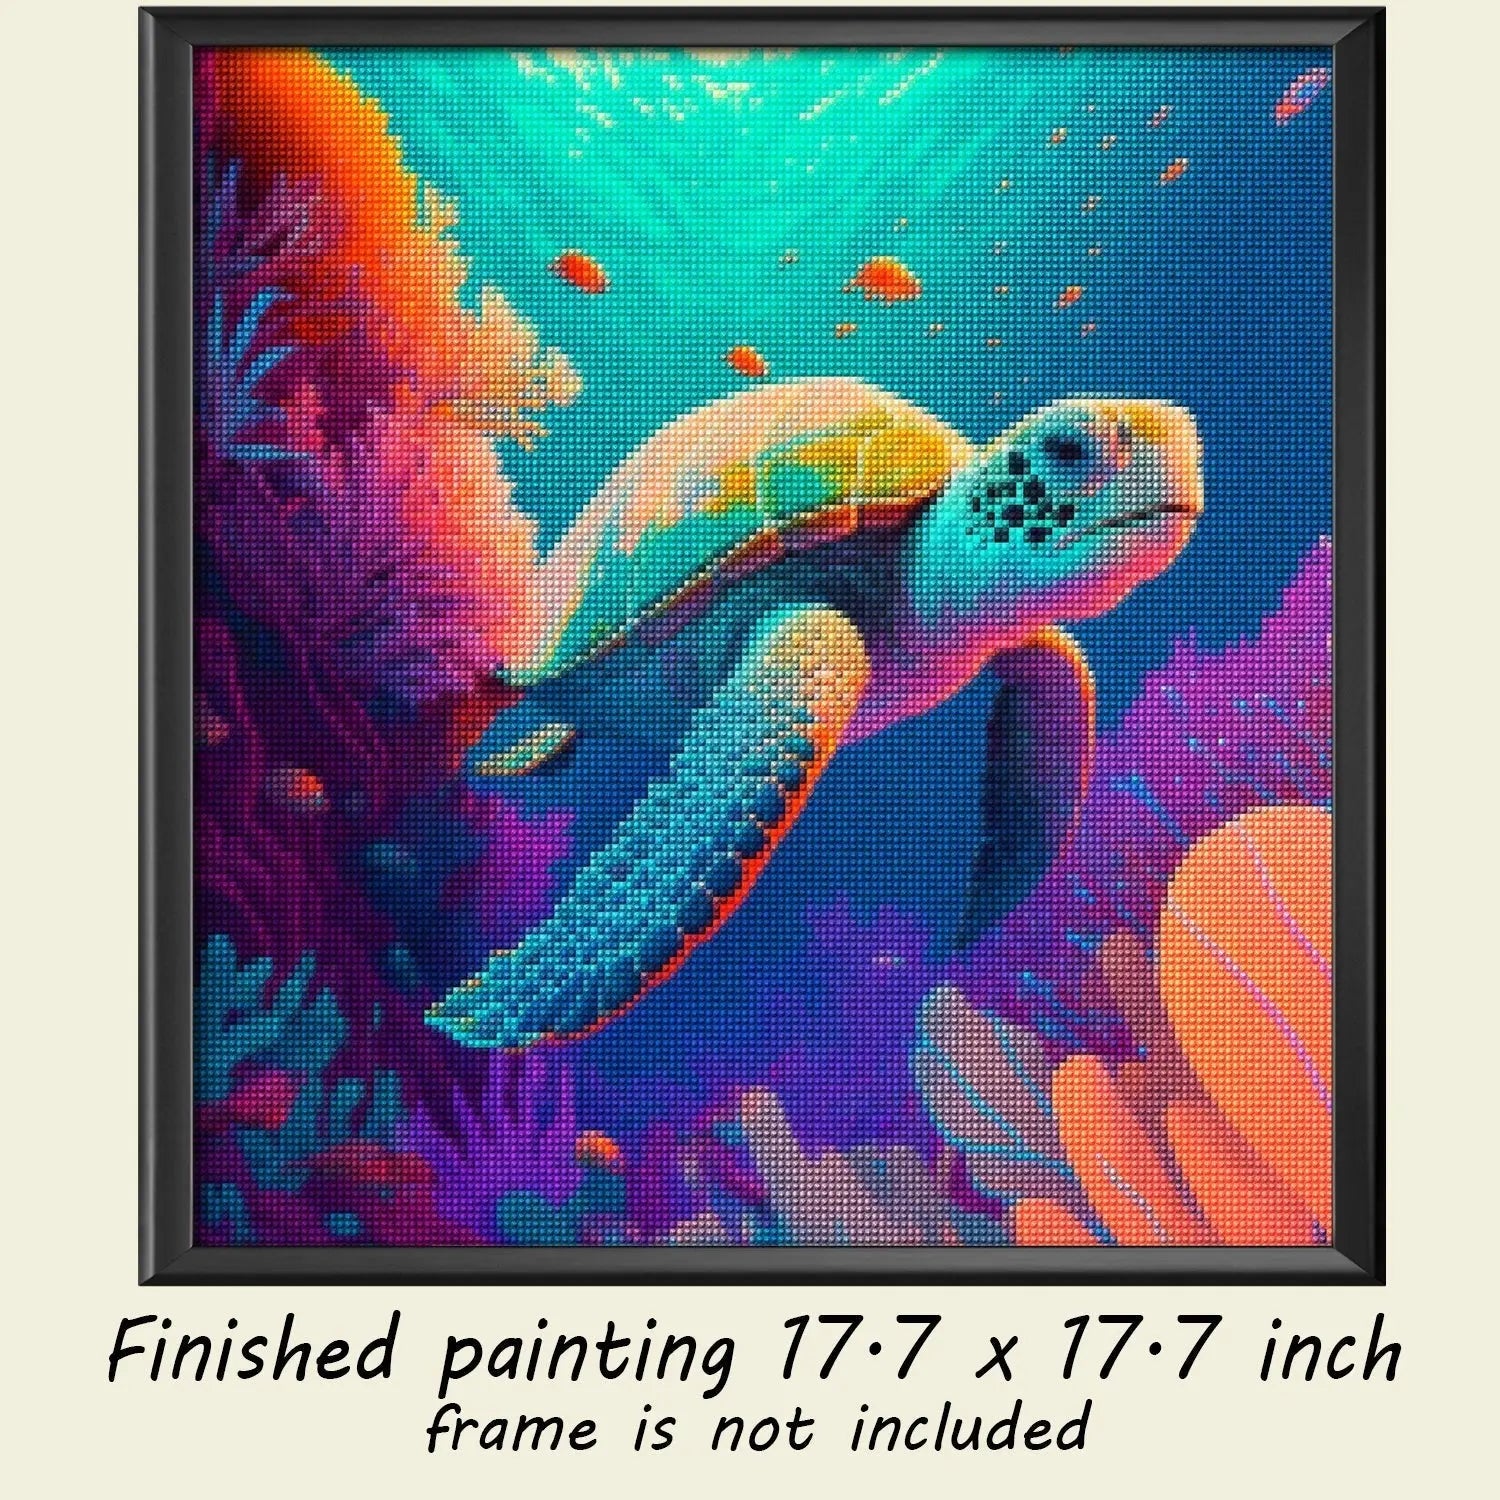 Sea Turtle's Journey - Diamond Painting Kit - YLJ Art Shop